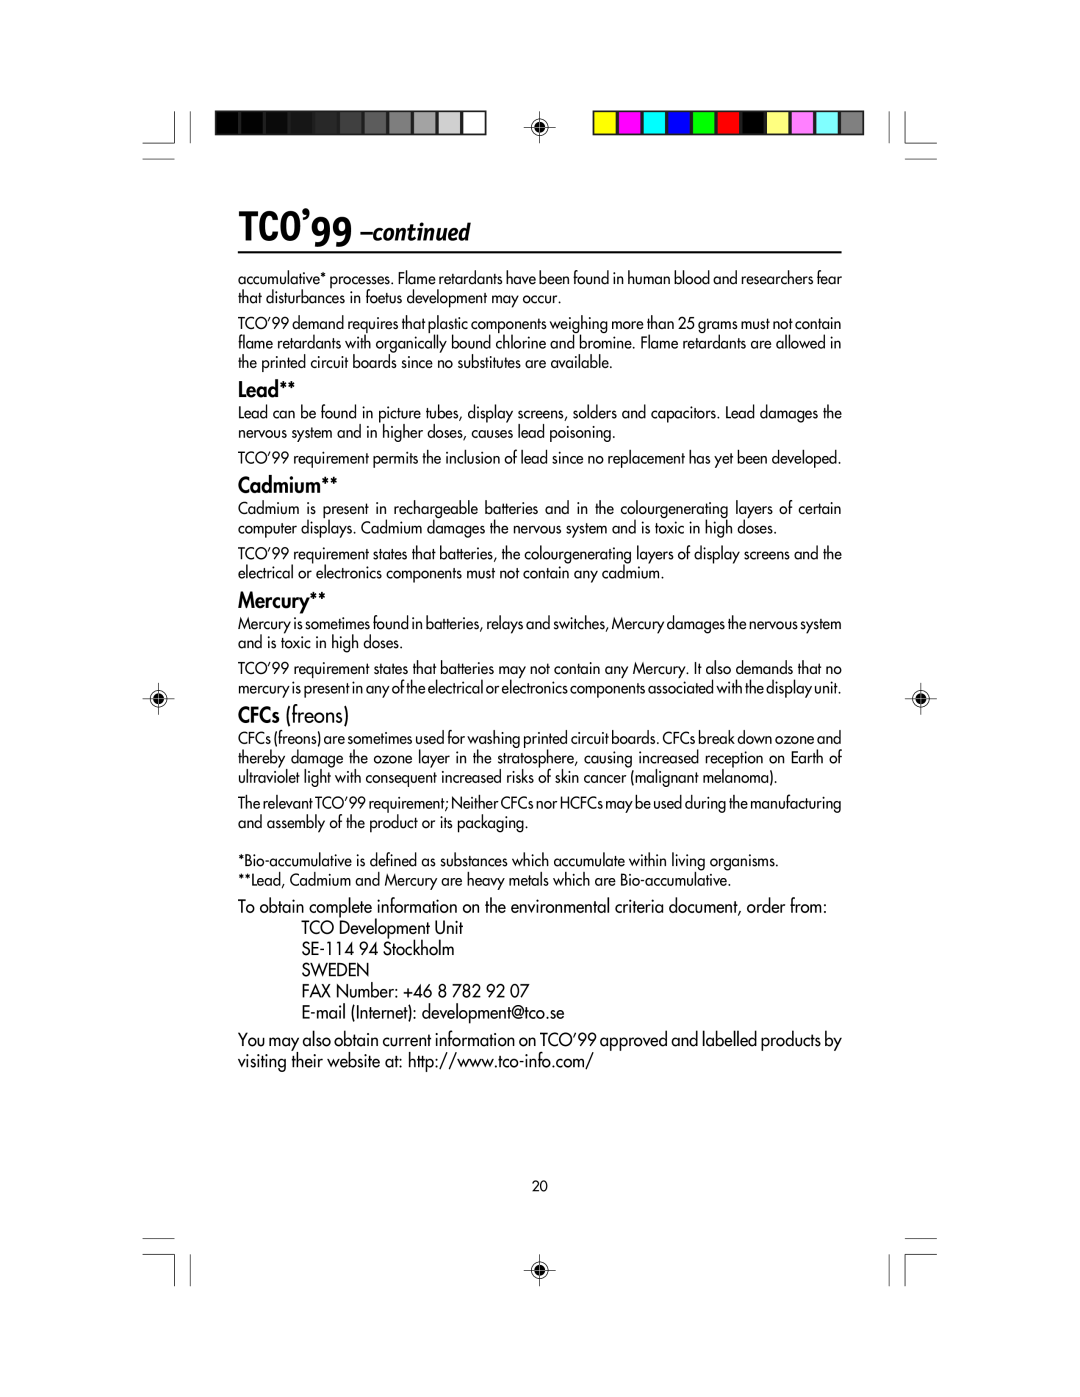 NEC LCD1920NX manual TCO’99 -continued, Lead, Cadmium, Mercury, CFCs freons 